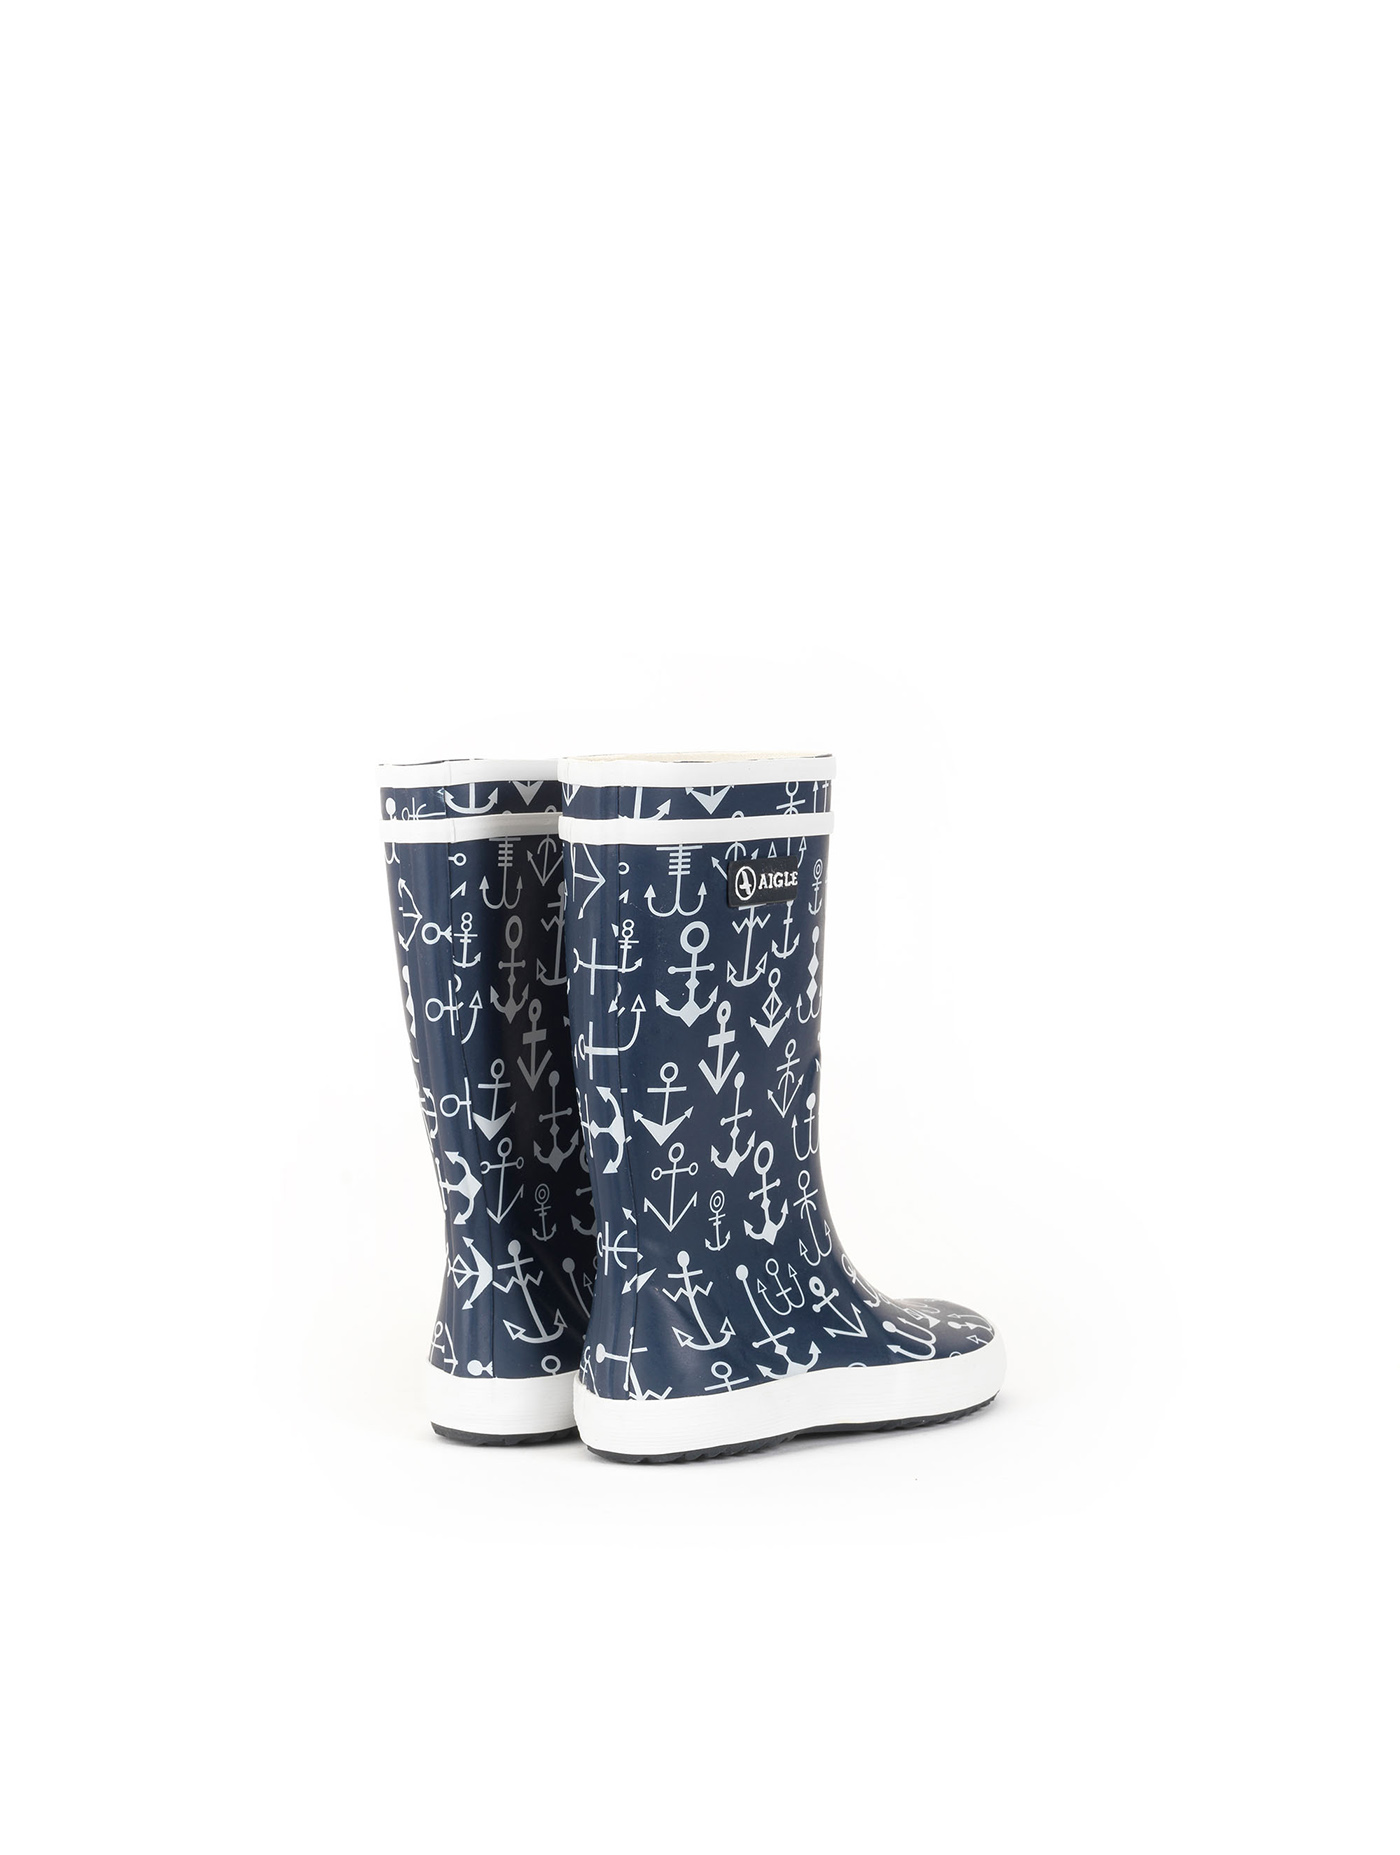 bling rain boots